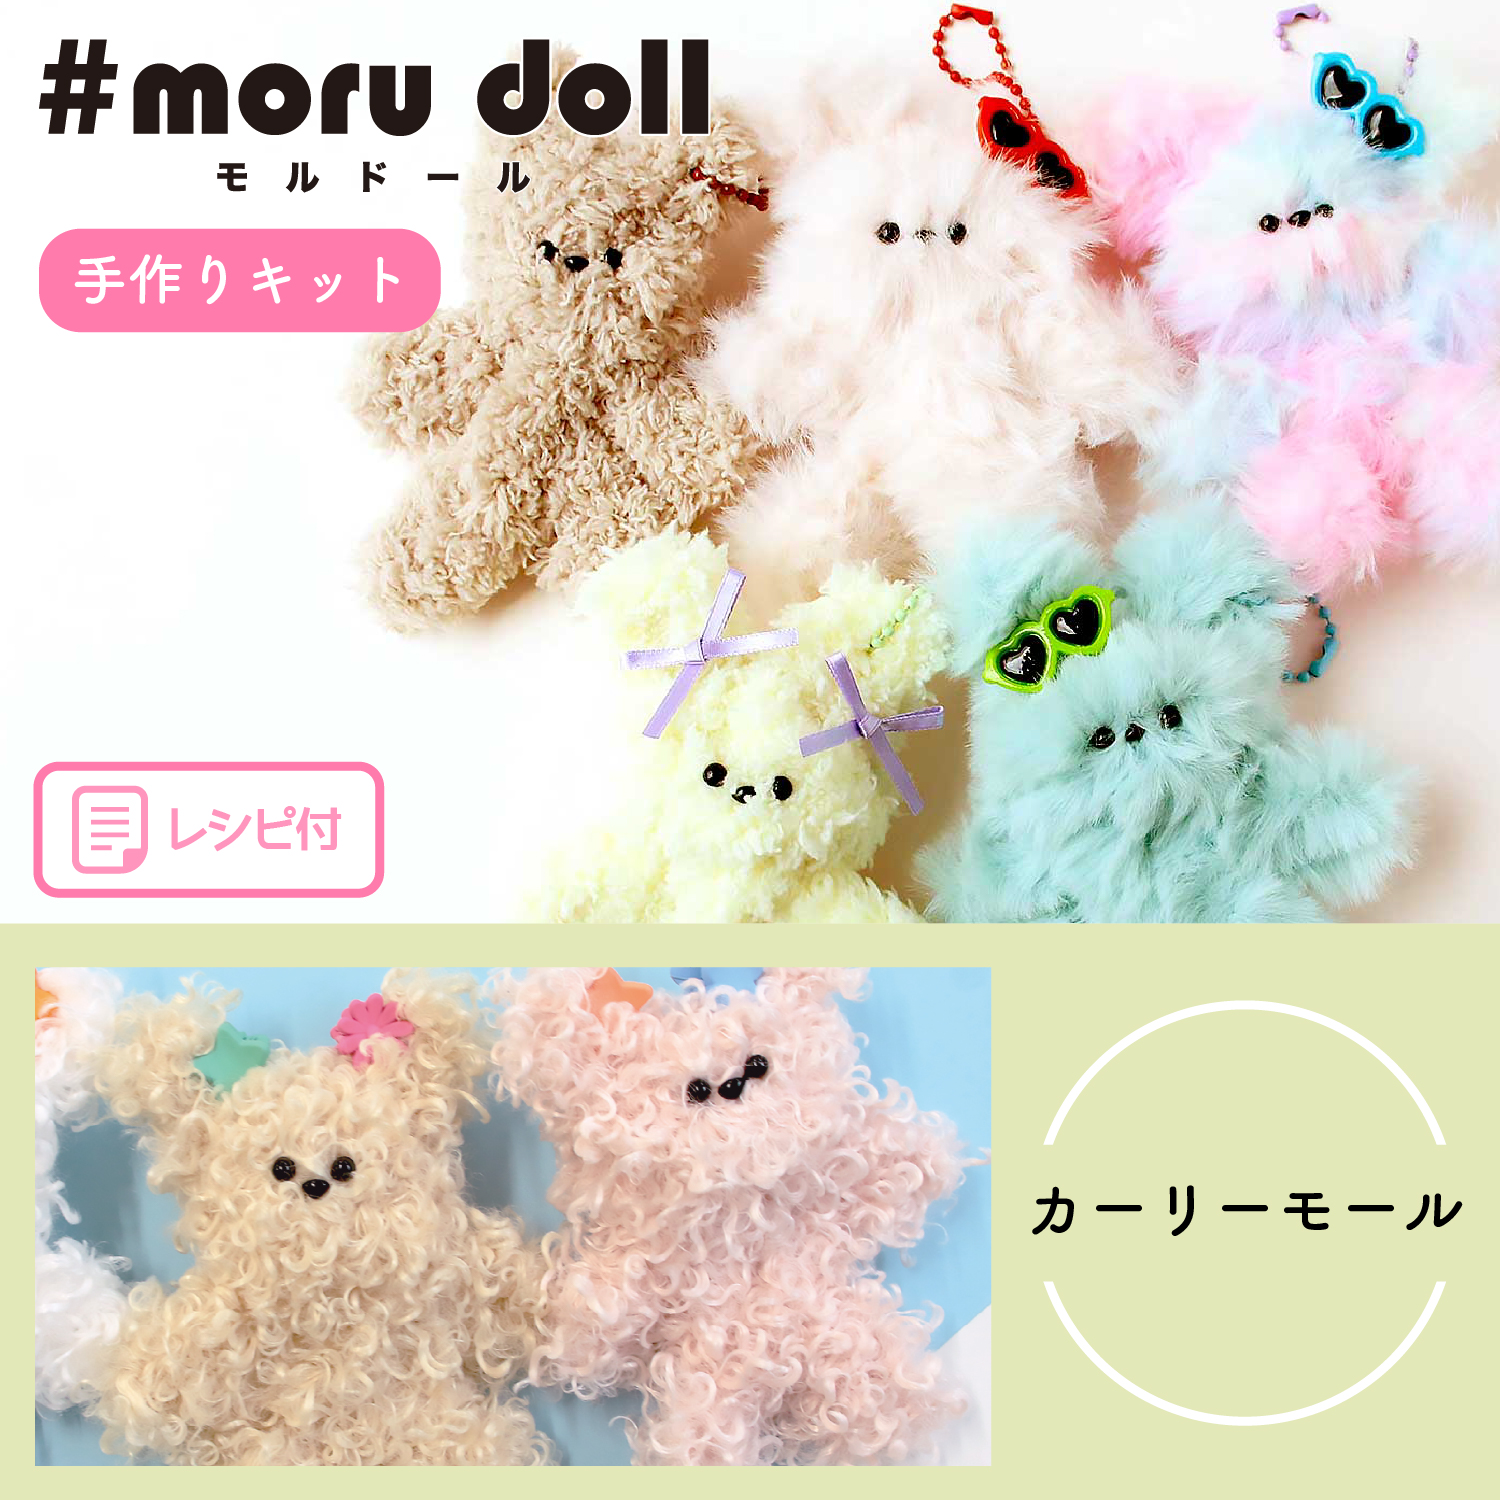 MOL-KIT Moll doll Korean miscellaneous goods Moldoll kit, Curly mall (bag)